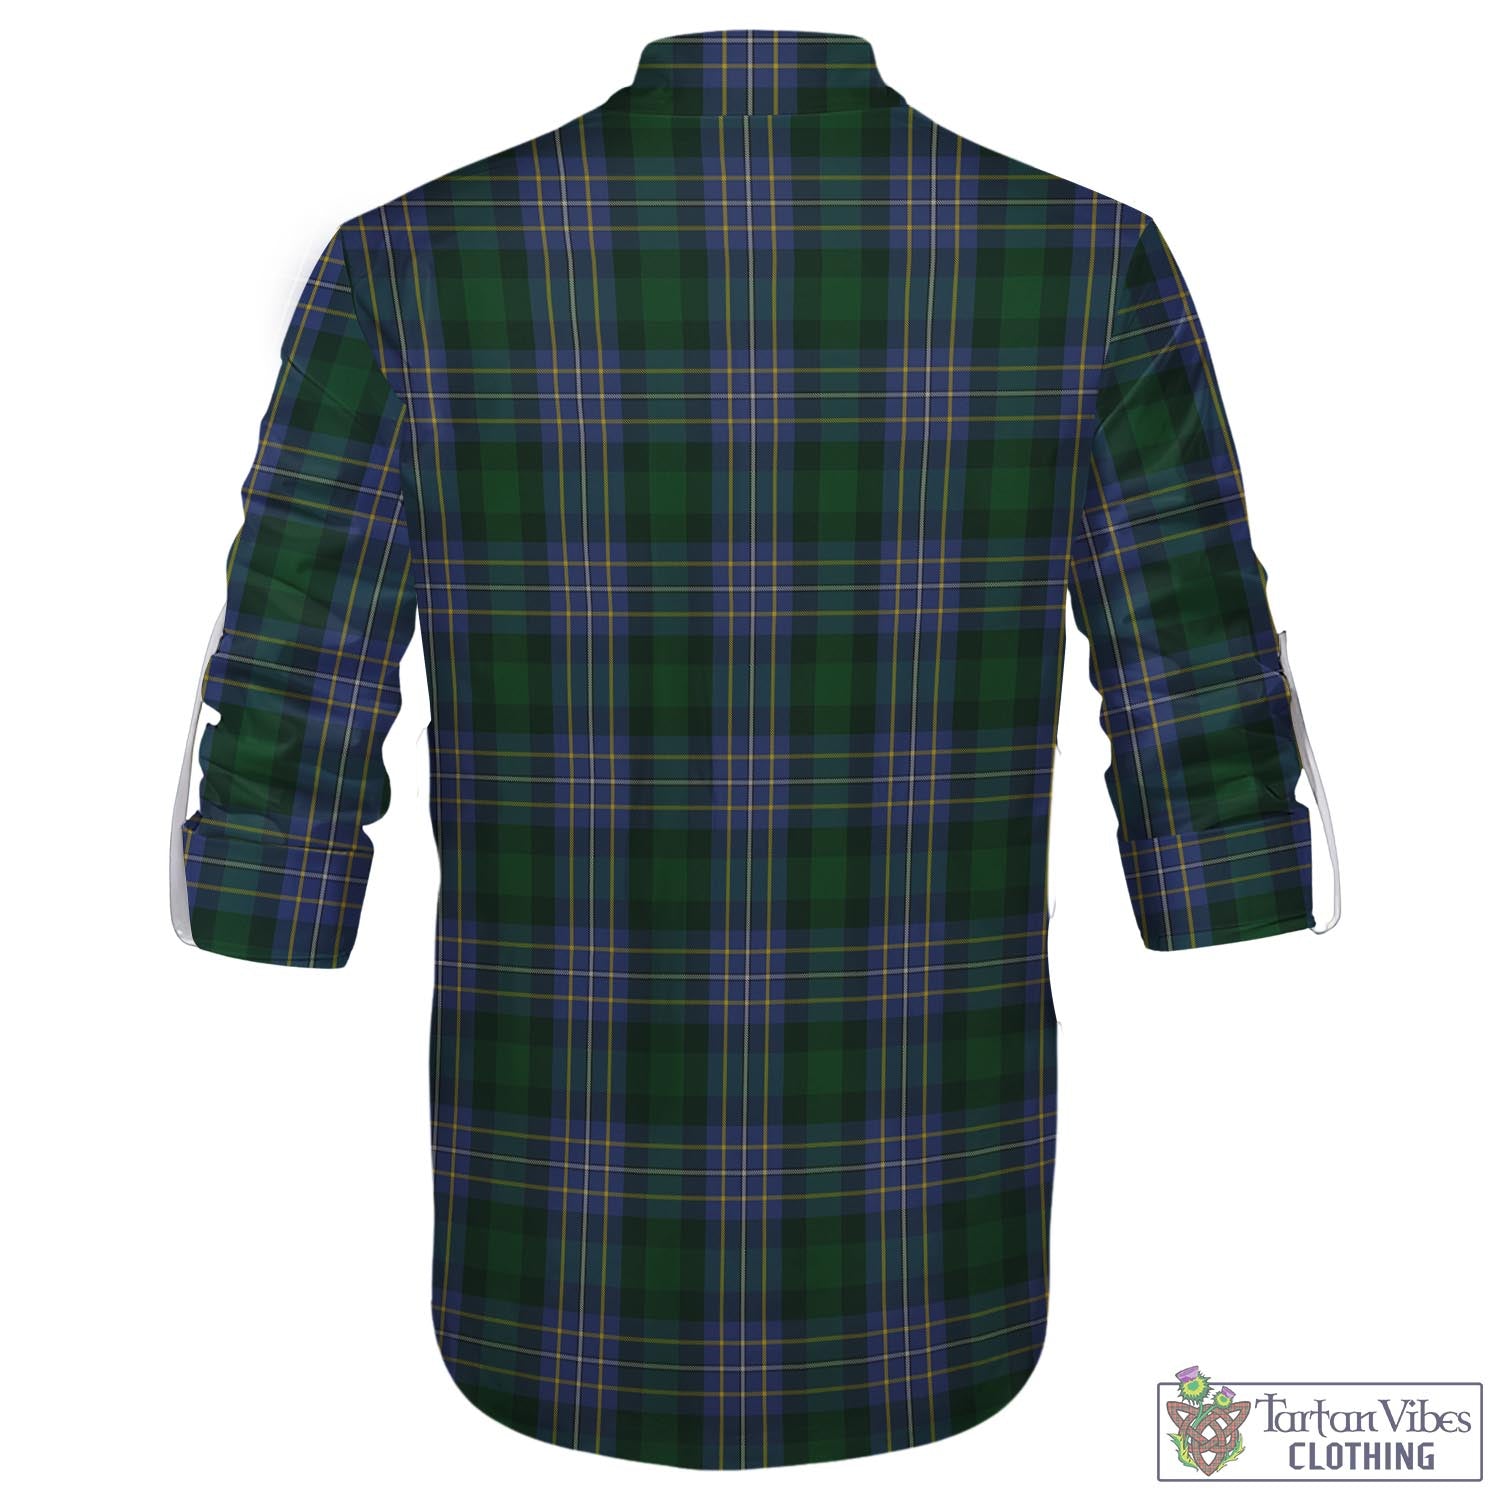 Tartan Vibes Clothing Hughes Tartan Men's Scottish Traditional Jacobite Ghillie Kilt Shirt